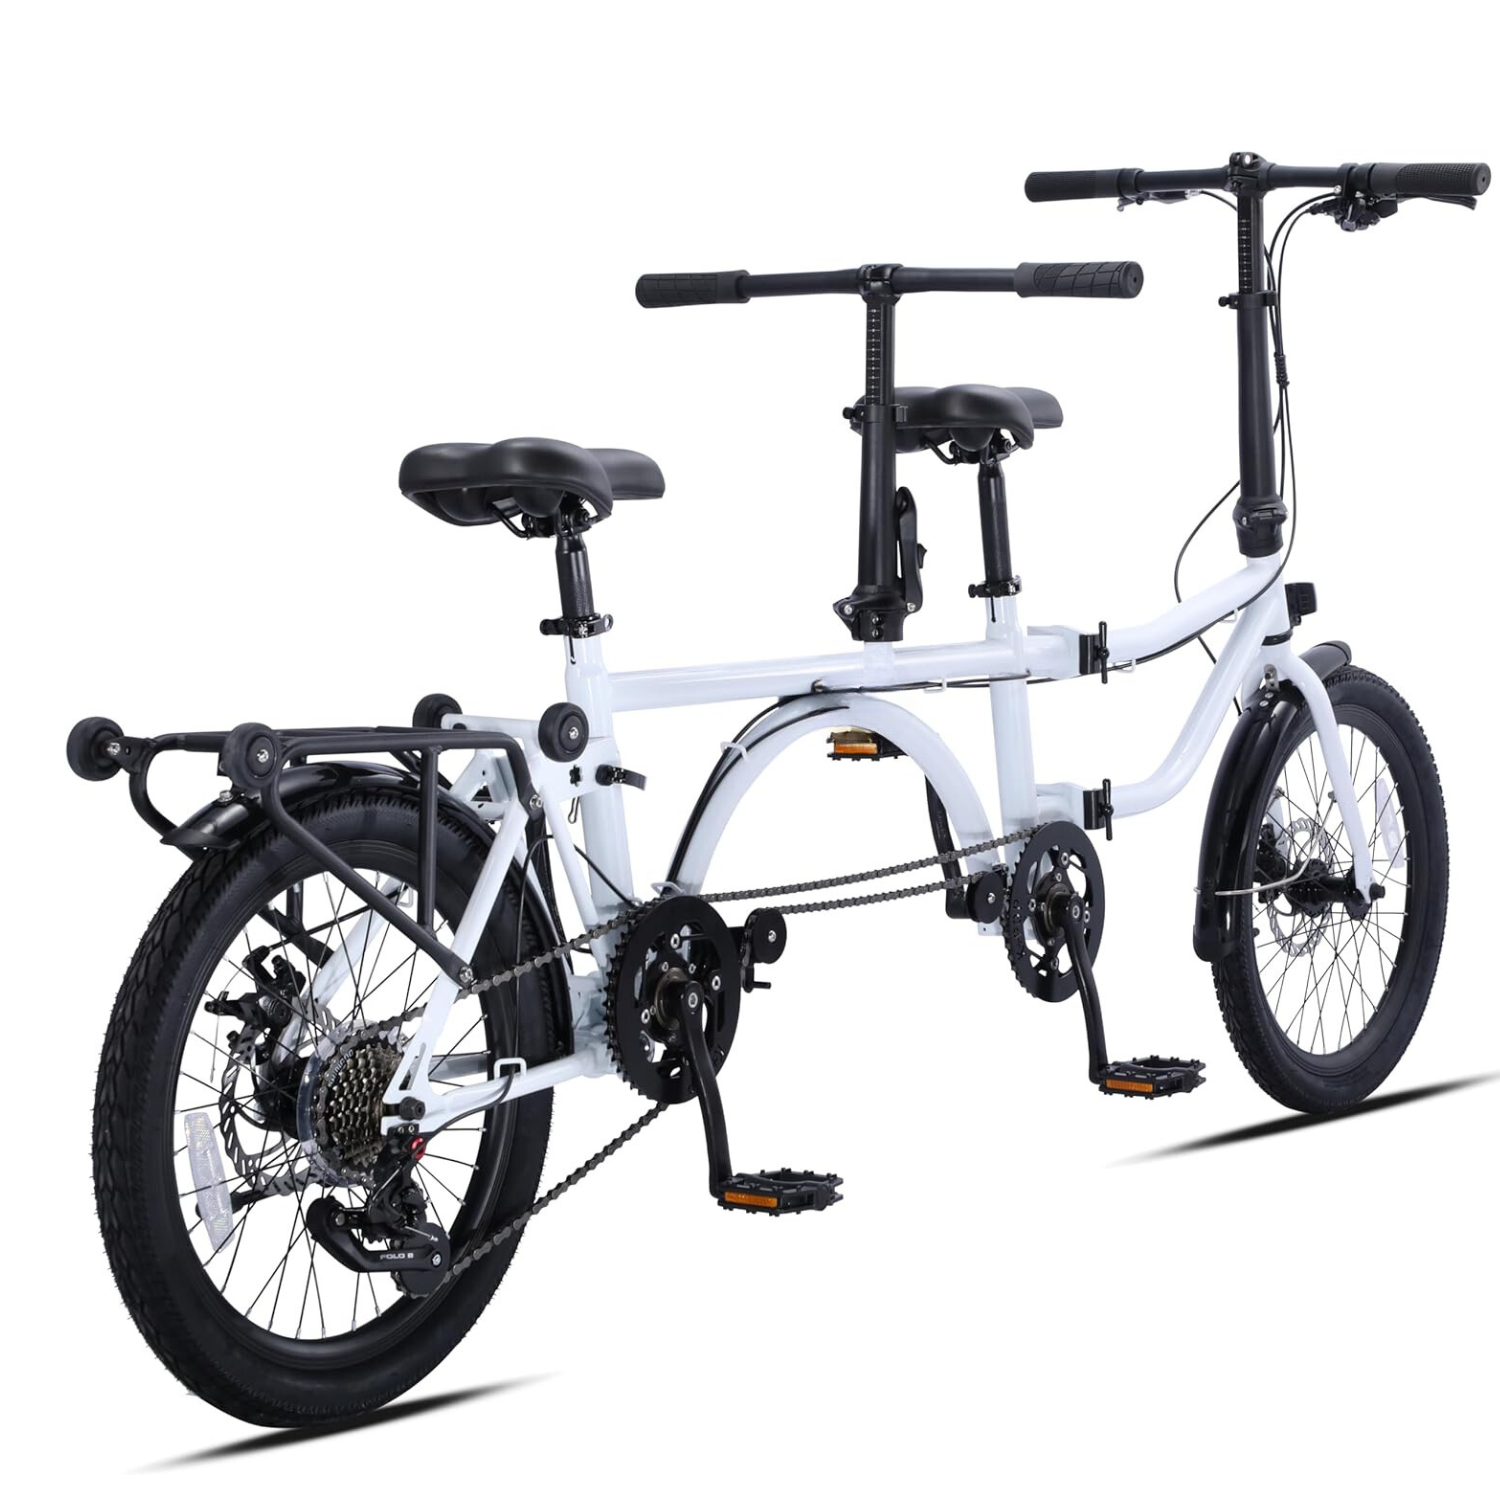 Bicicleta tándem plegable K + POP de 20 pulgadas, bici de 3 plazas